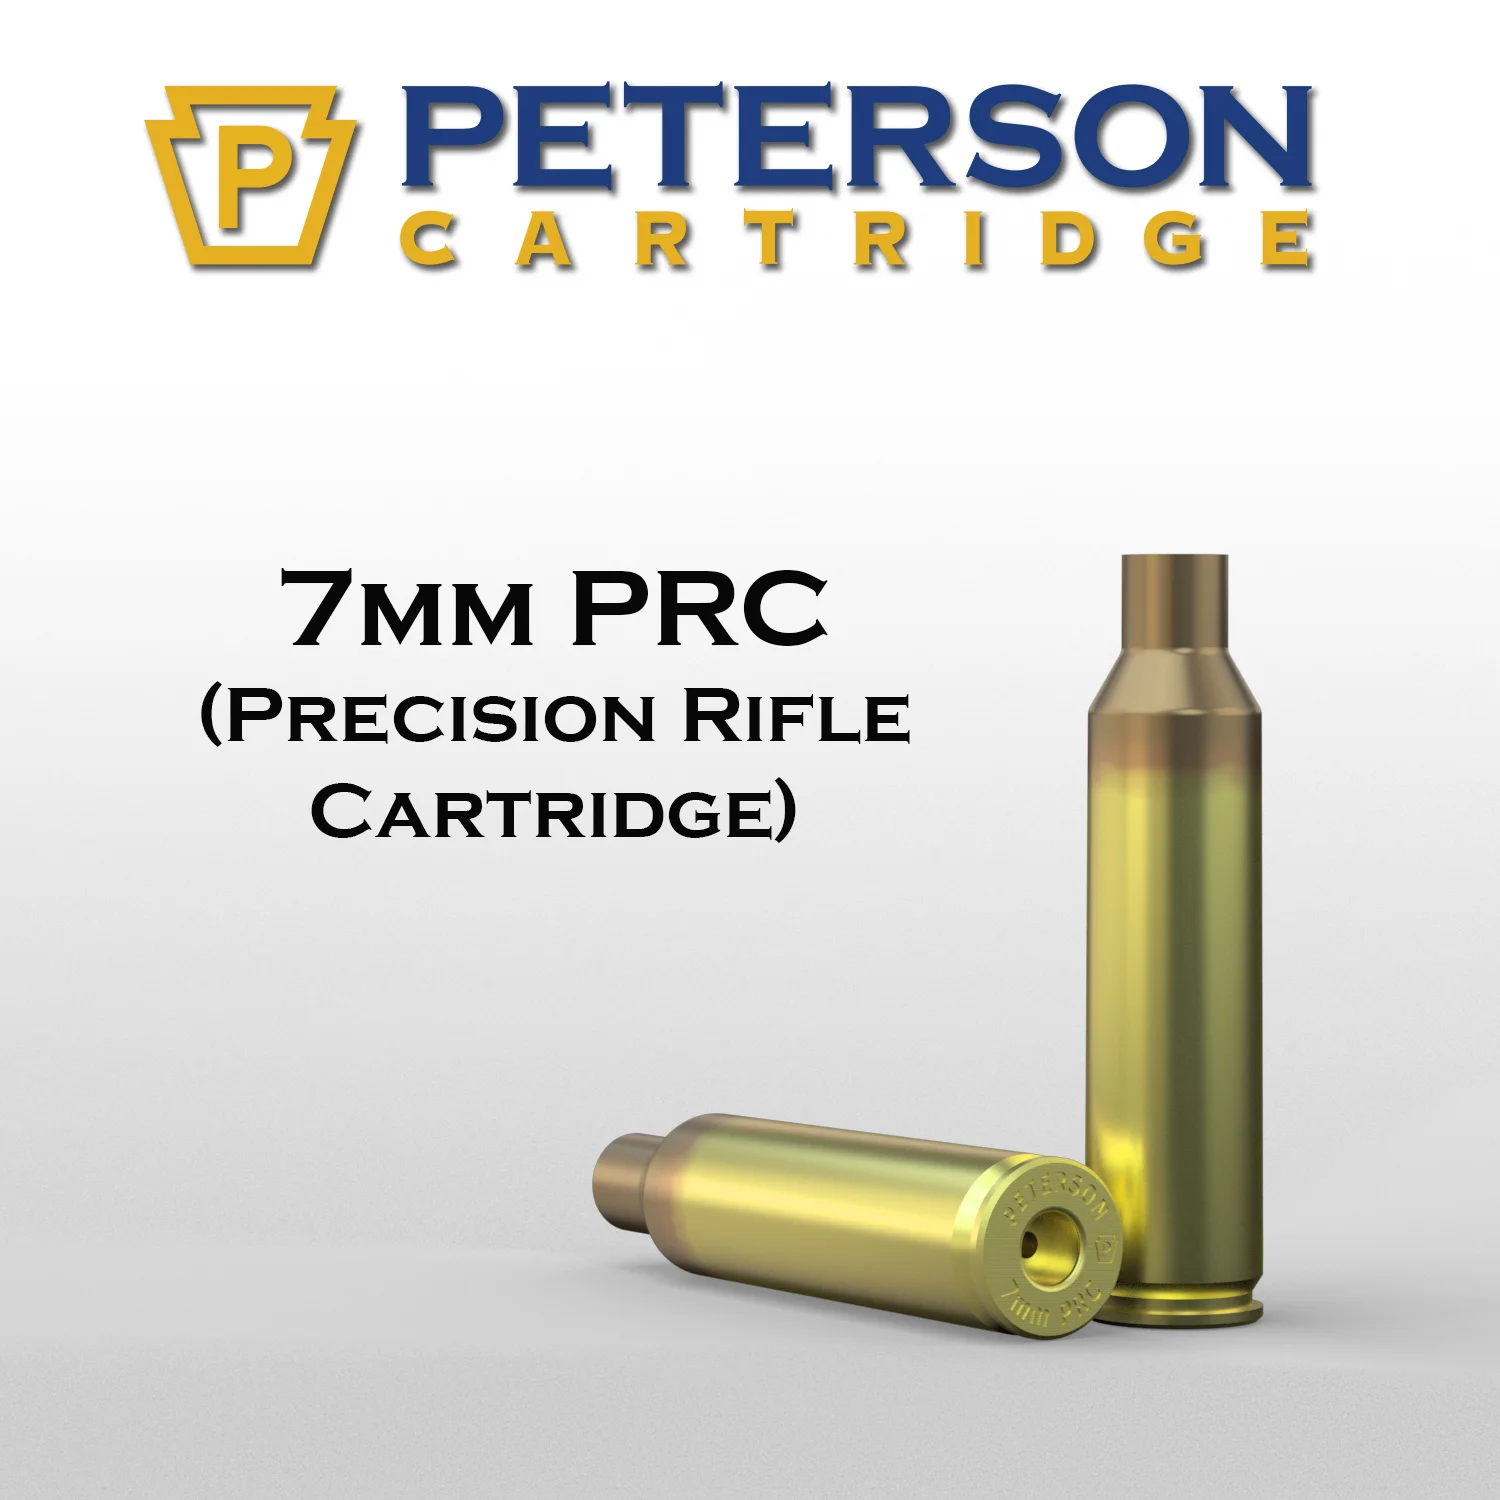 Peterson Cartridge 7mm PRC Unprimed Brass, 50ct